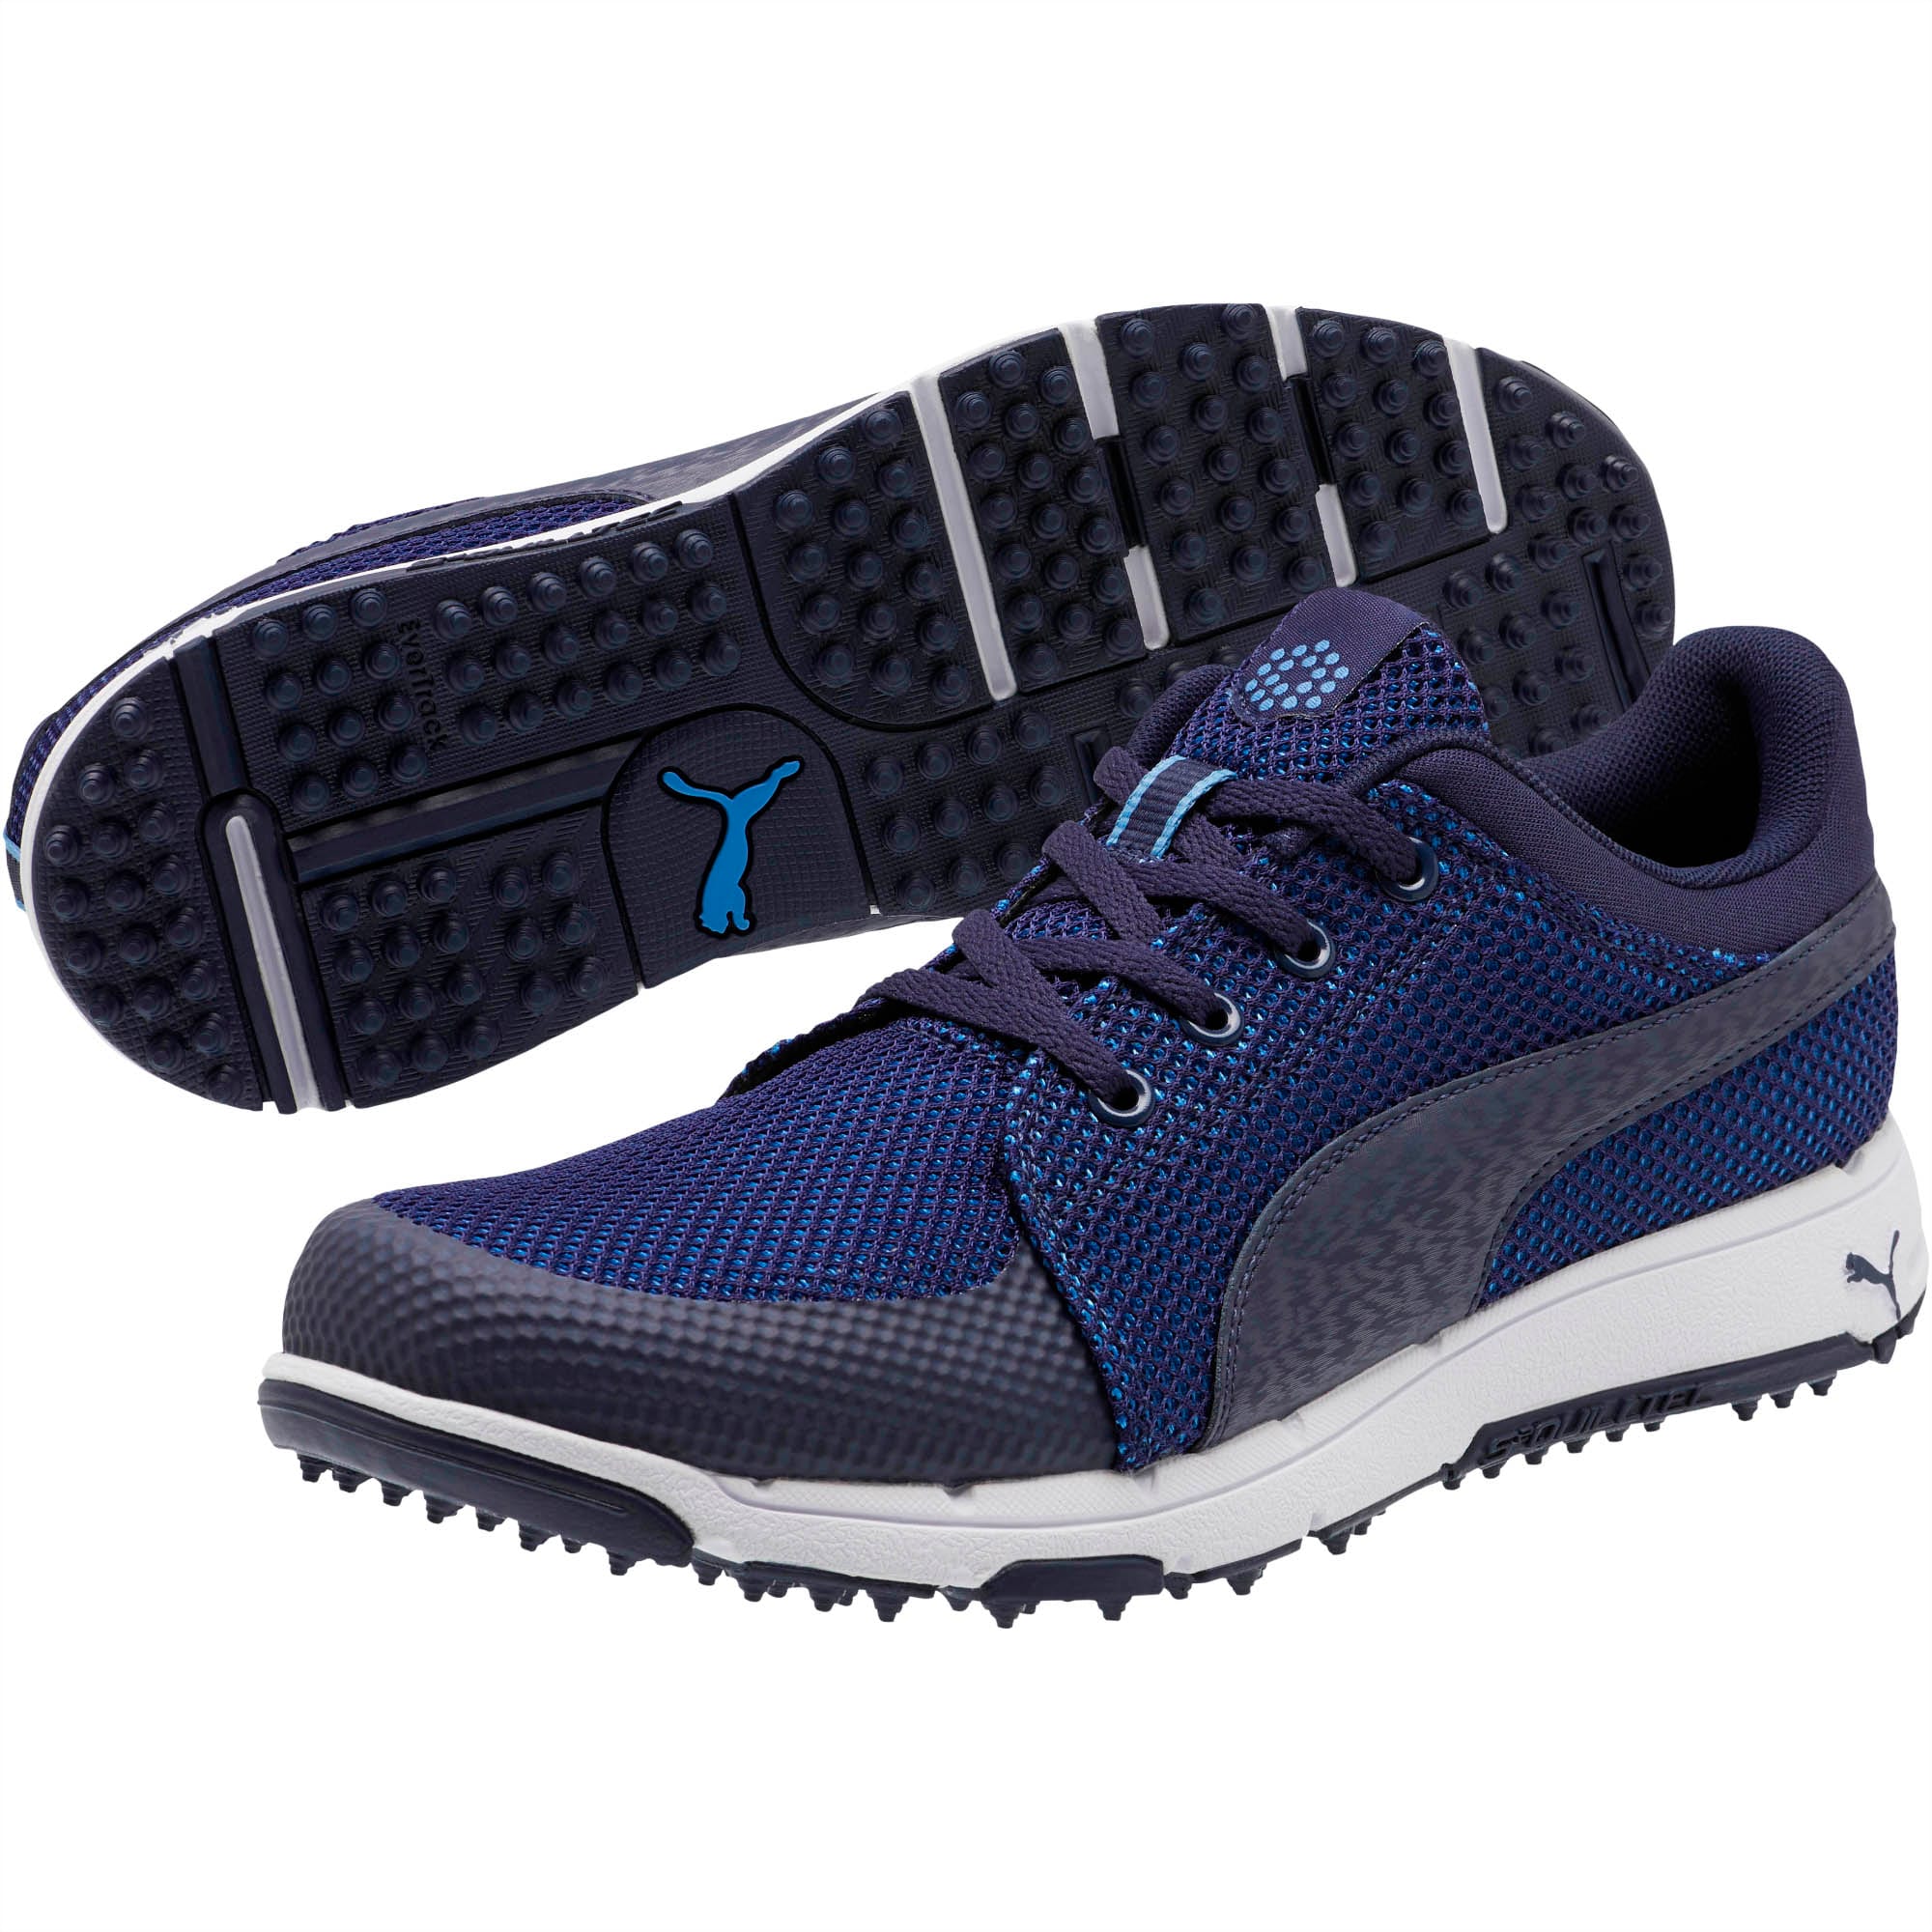 puma grip sport tech golf shoes